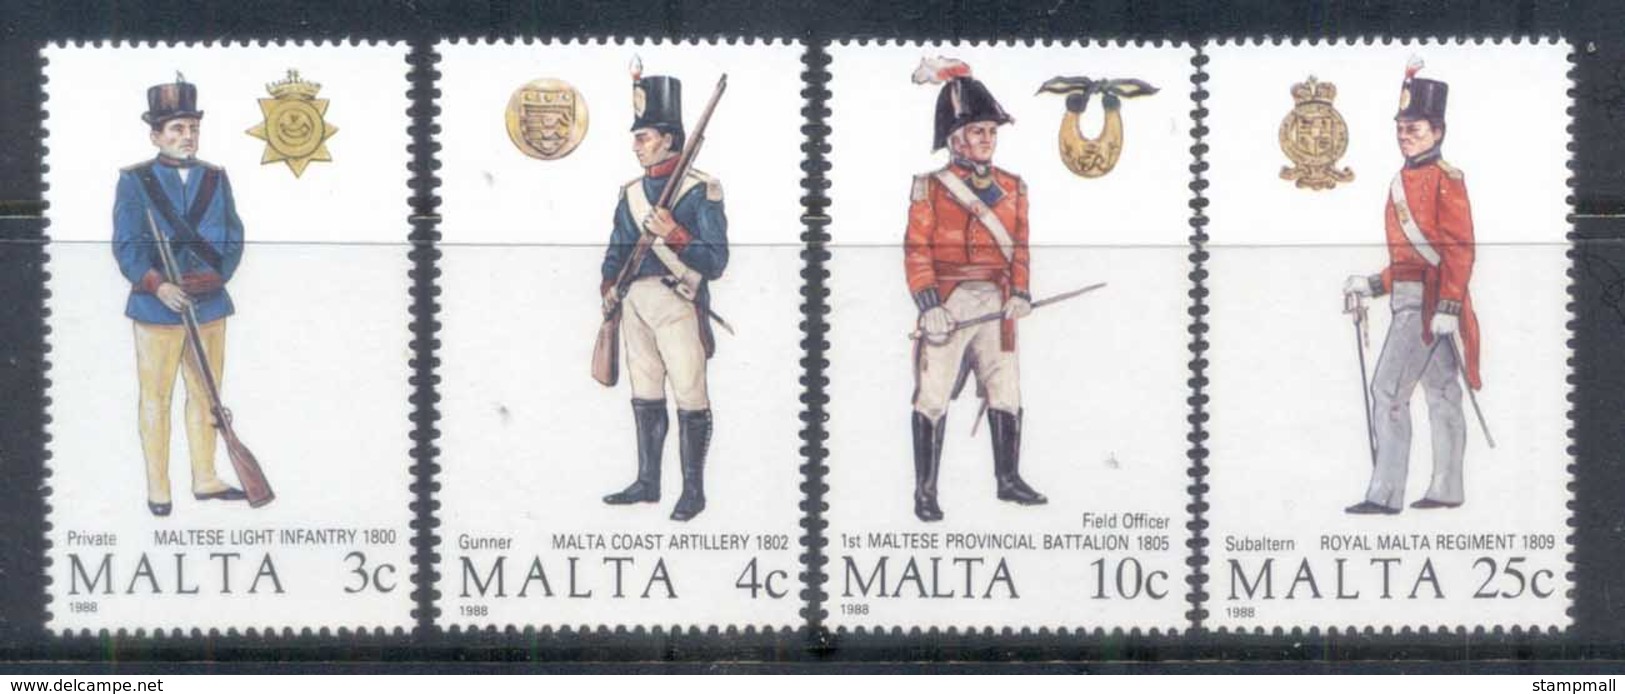 Malta 1988 Military Uniforms MUH - Malta